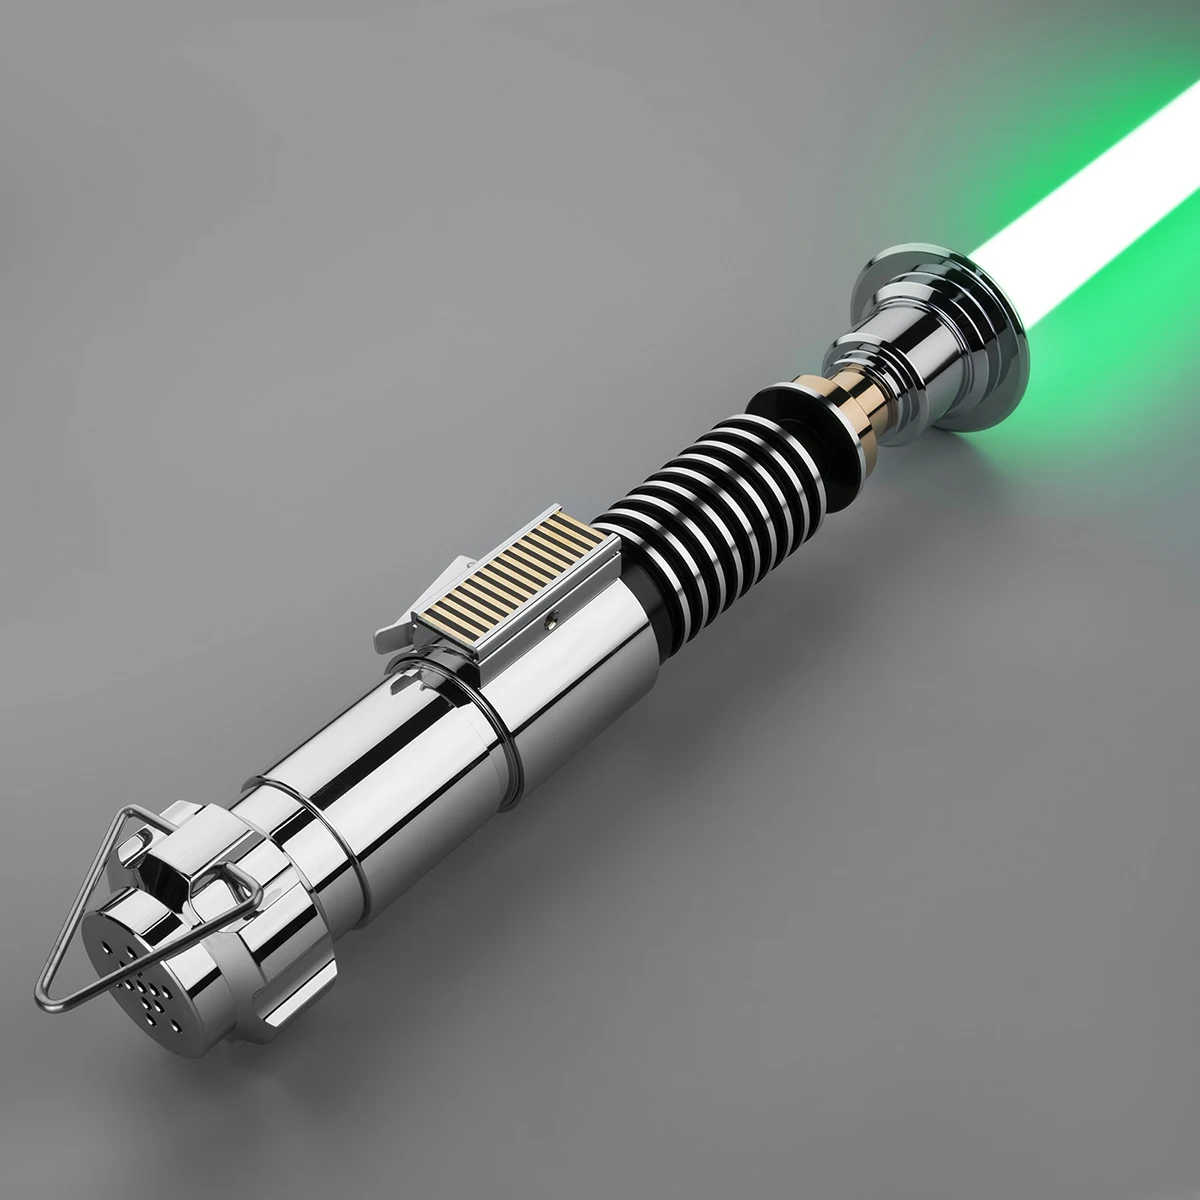 

JOYACESaber Xeno Pixel 3.0 LUKE Lightsaber Metal Handle Saber 16/34 Sound Effects for Heavy Dueling Laser Swords Cosplay Toys